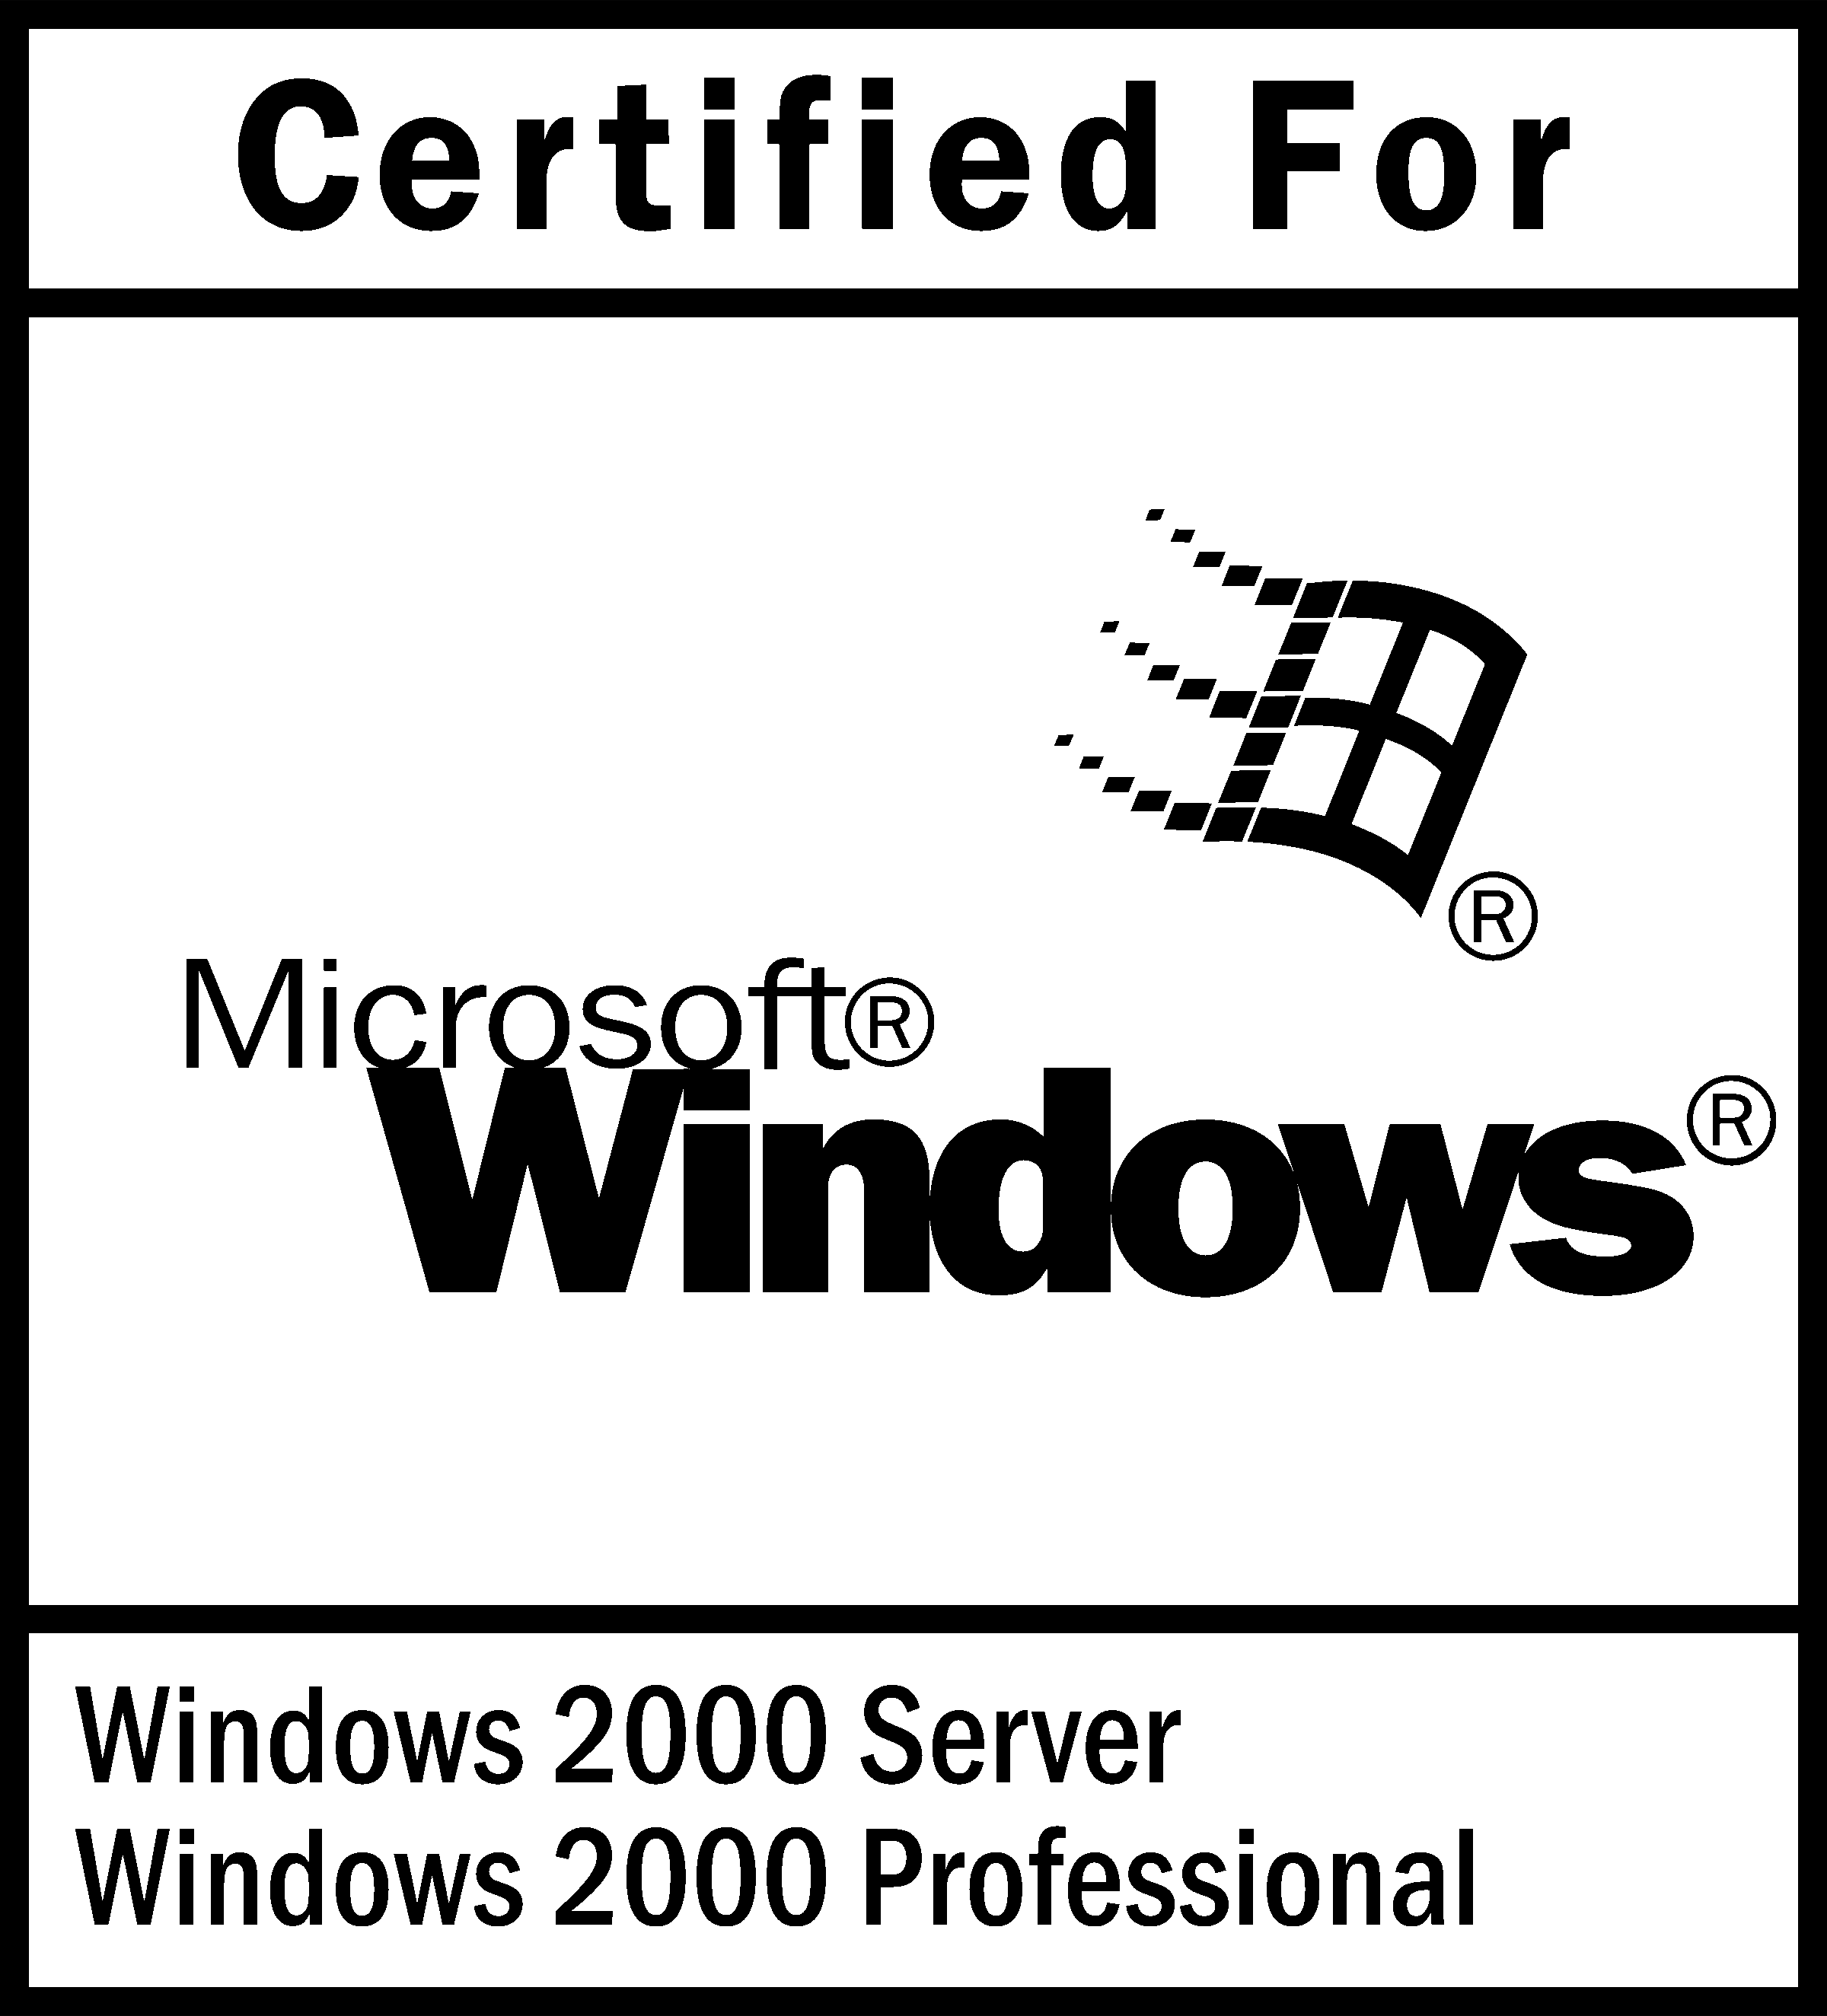 Windows 2000 Logo - Microsoft Windows 2000 Logo PNG Transparent & SVG Vector